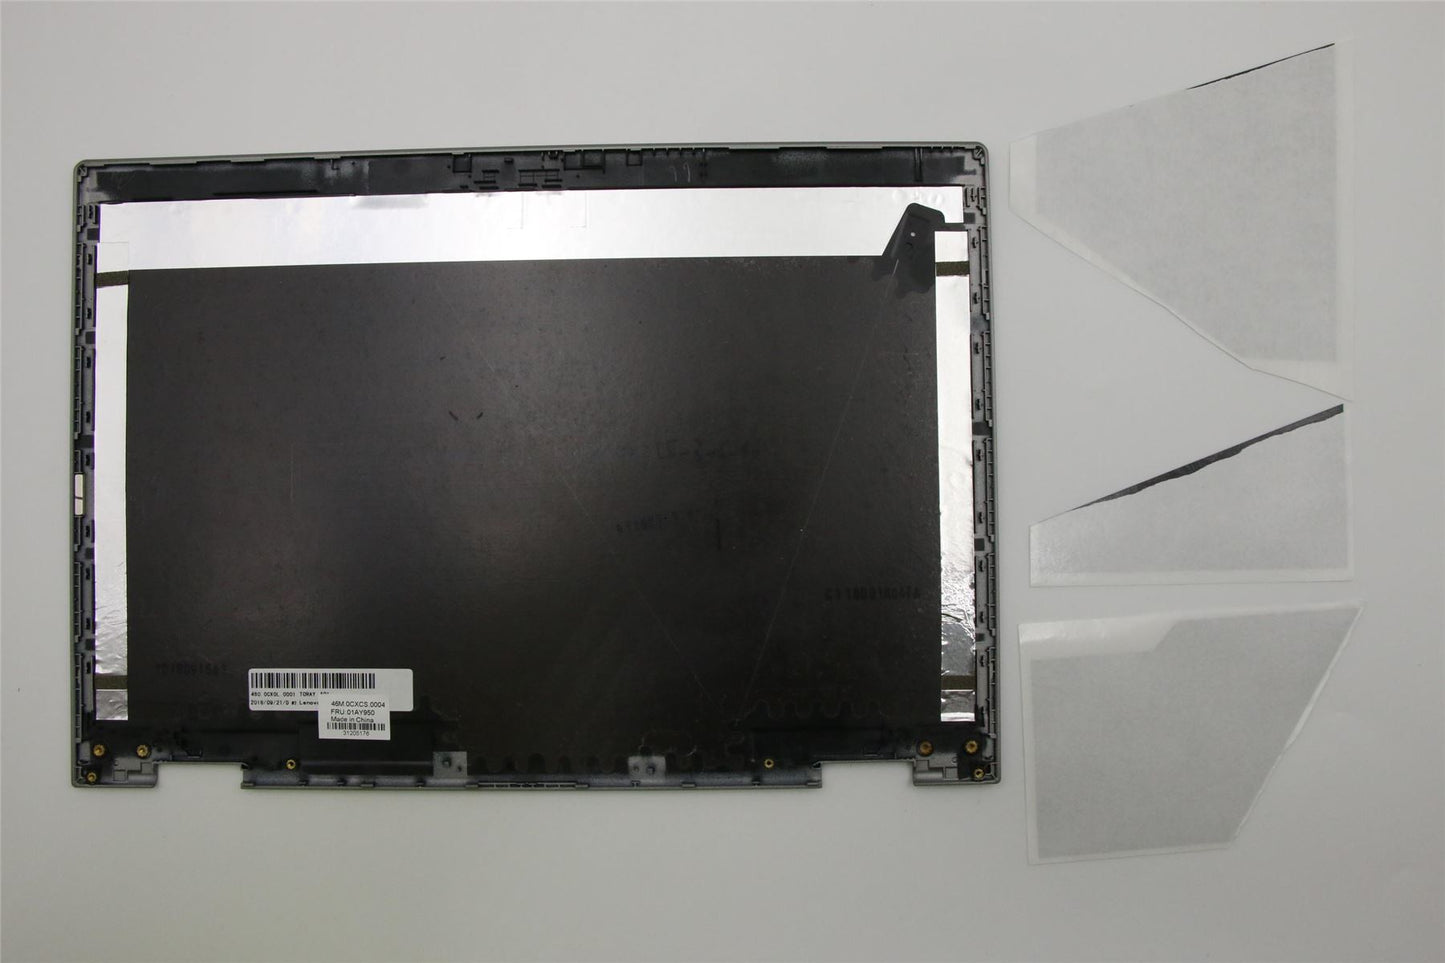 Lenovo Yoga X1 3rd Gen LCD Cover Rear Back Housing Grey 01AY950